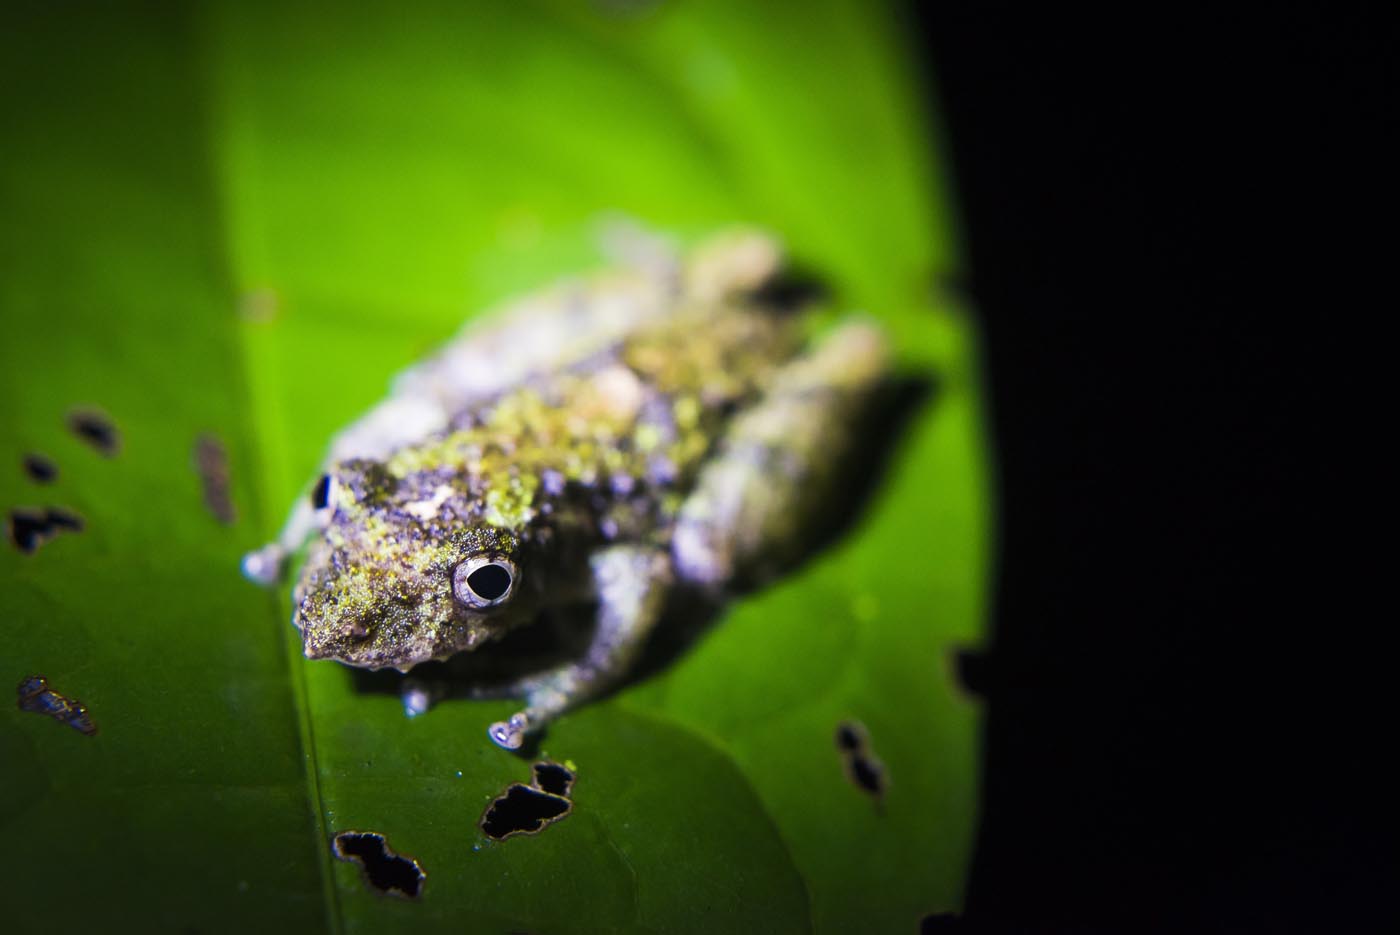 Frog at night in Puerto Maldonado Amazon Jungle area, Tambopata National Reserve, Peru, South America